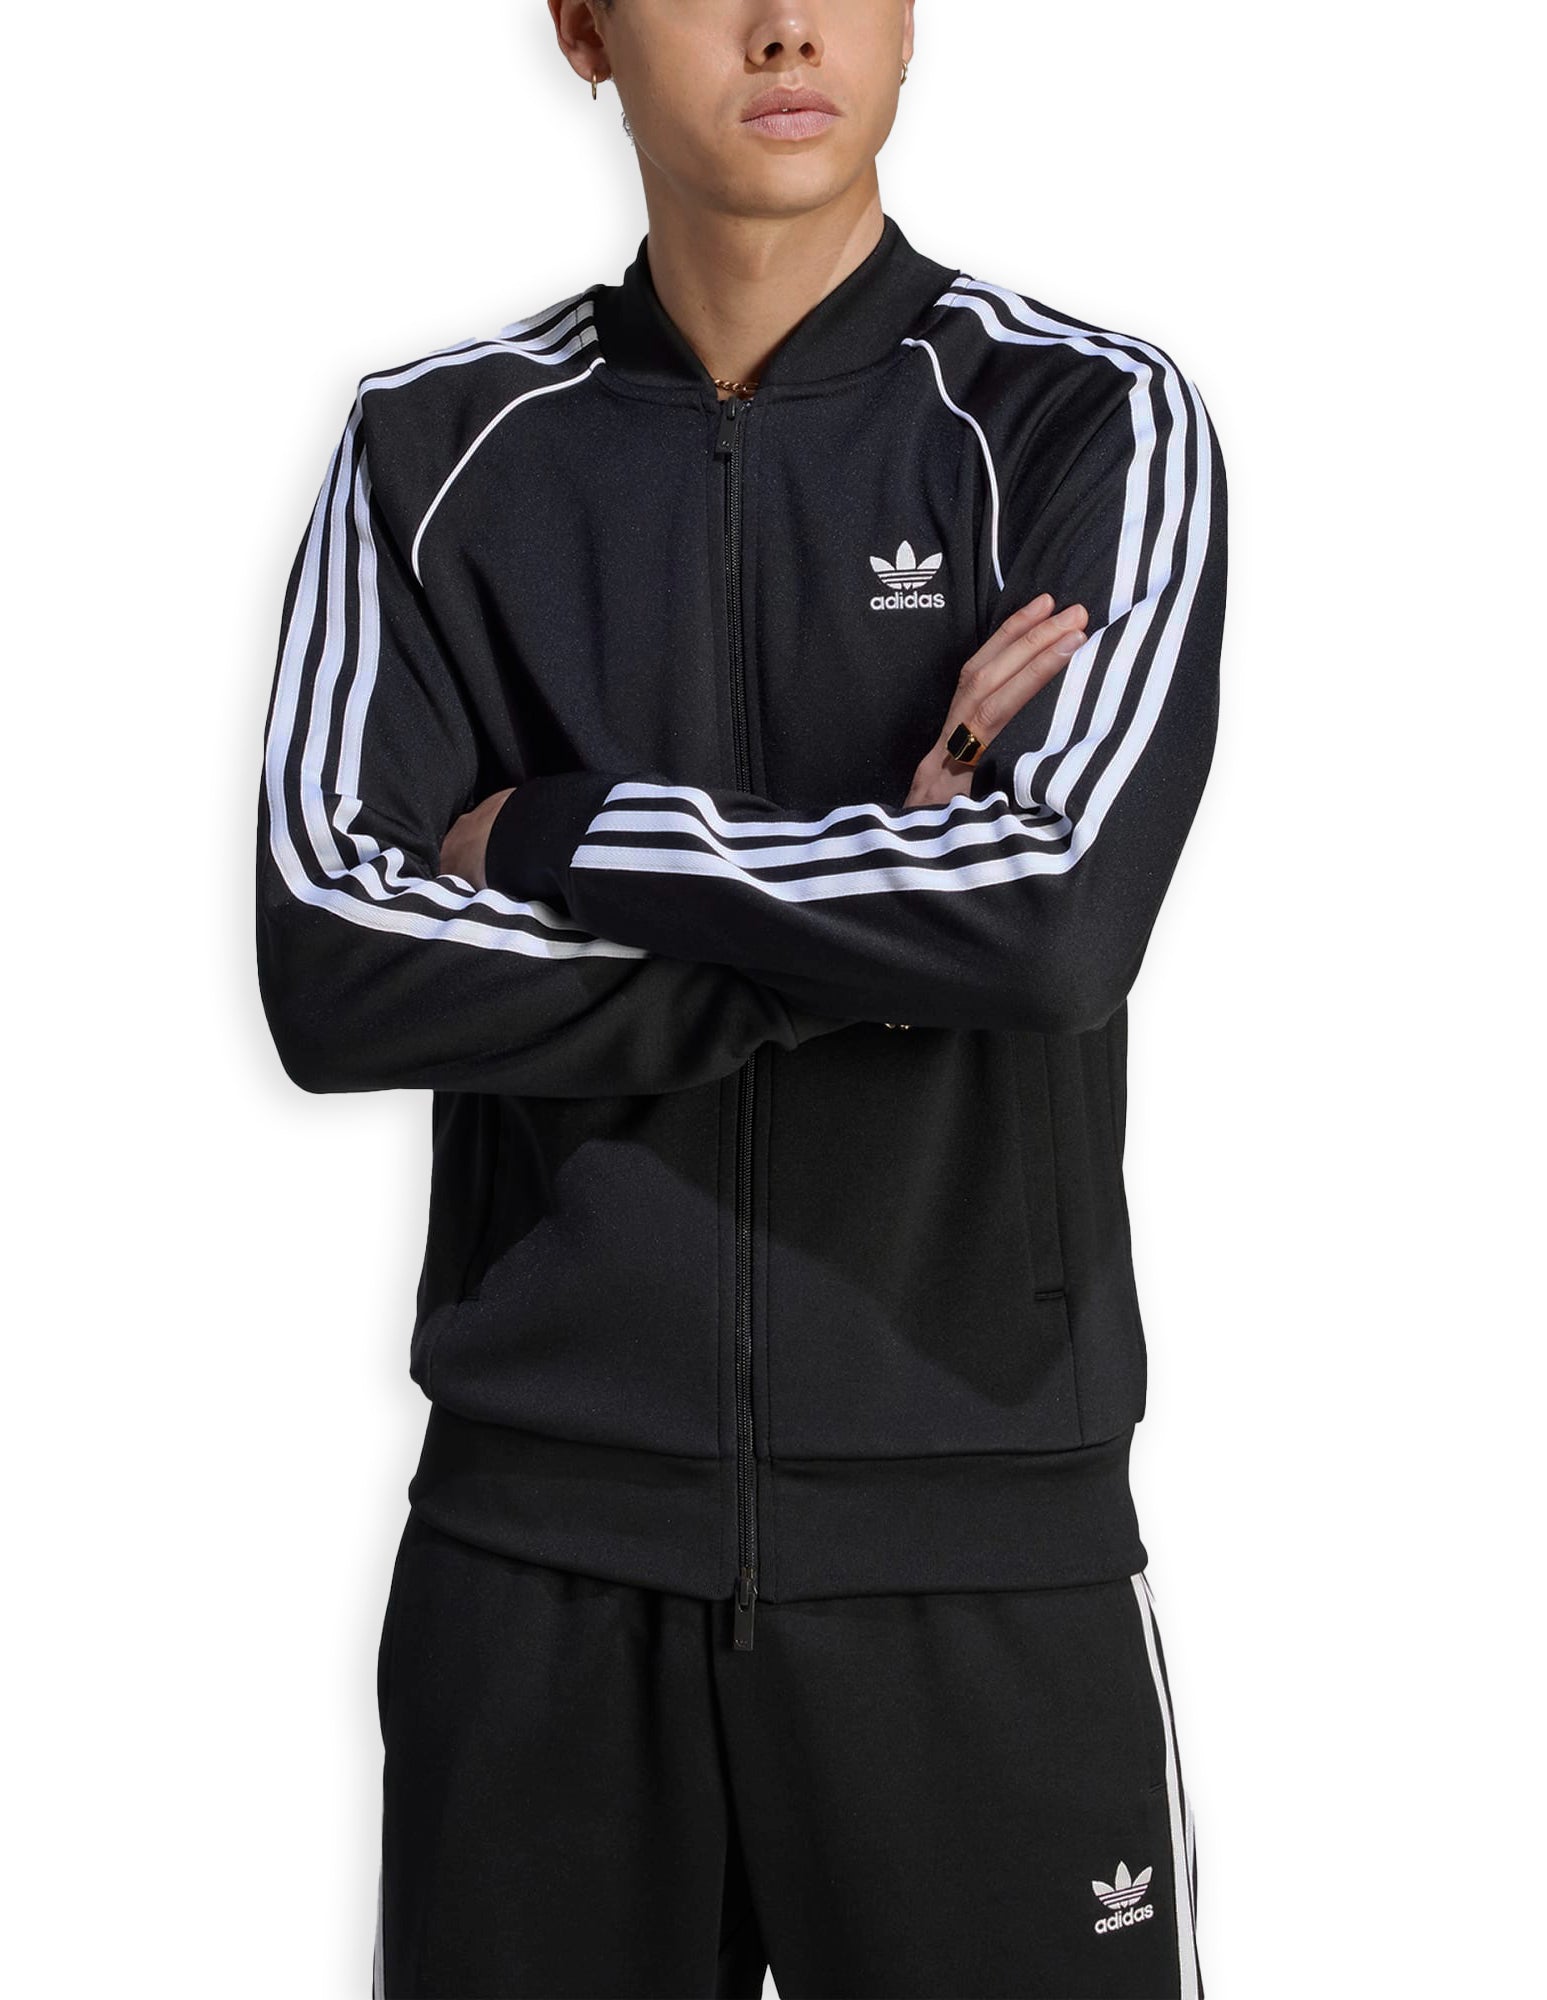 Adidas Sst Tt Black White Men's Zip Sweatshirt